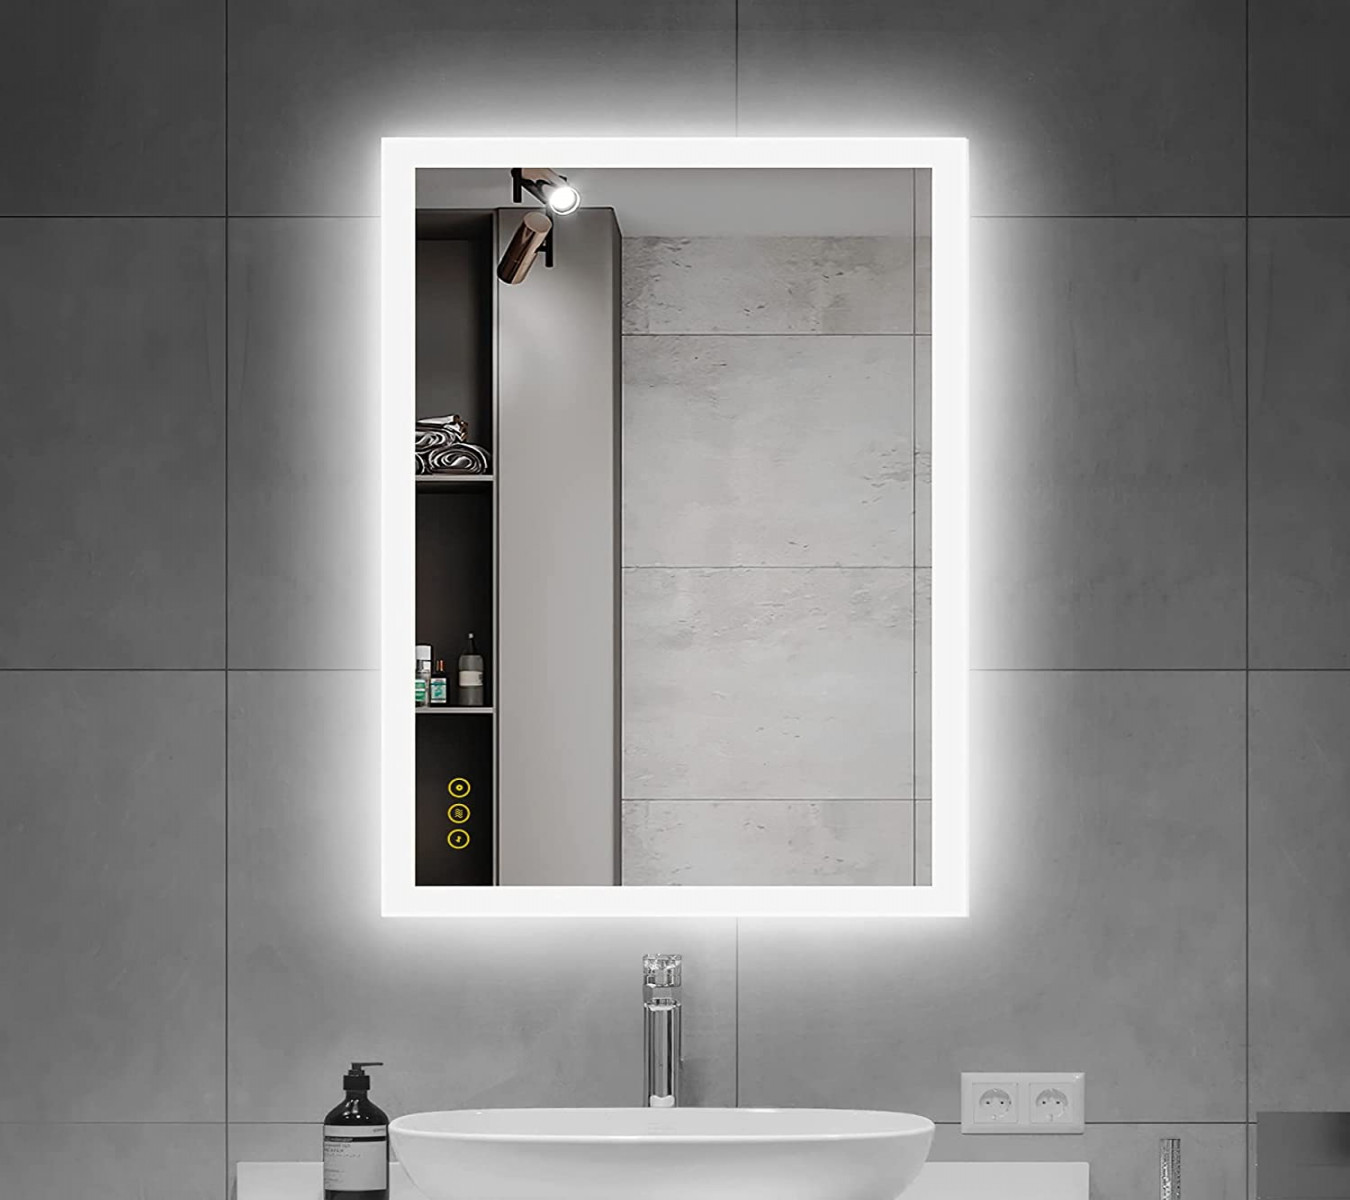 AI-LIGHTING Badezimmerspigel mit Beleuchtung × cm LED Badspiegel  Beleuchtet mit  Lichtfarben Dimmbare/Beschlagfrei/Energiesparend  Wandspiegel mit